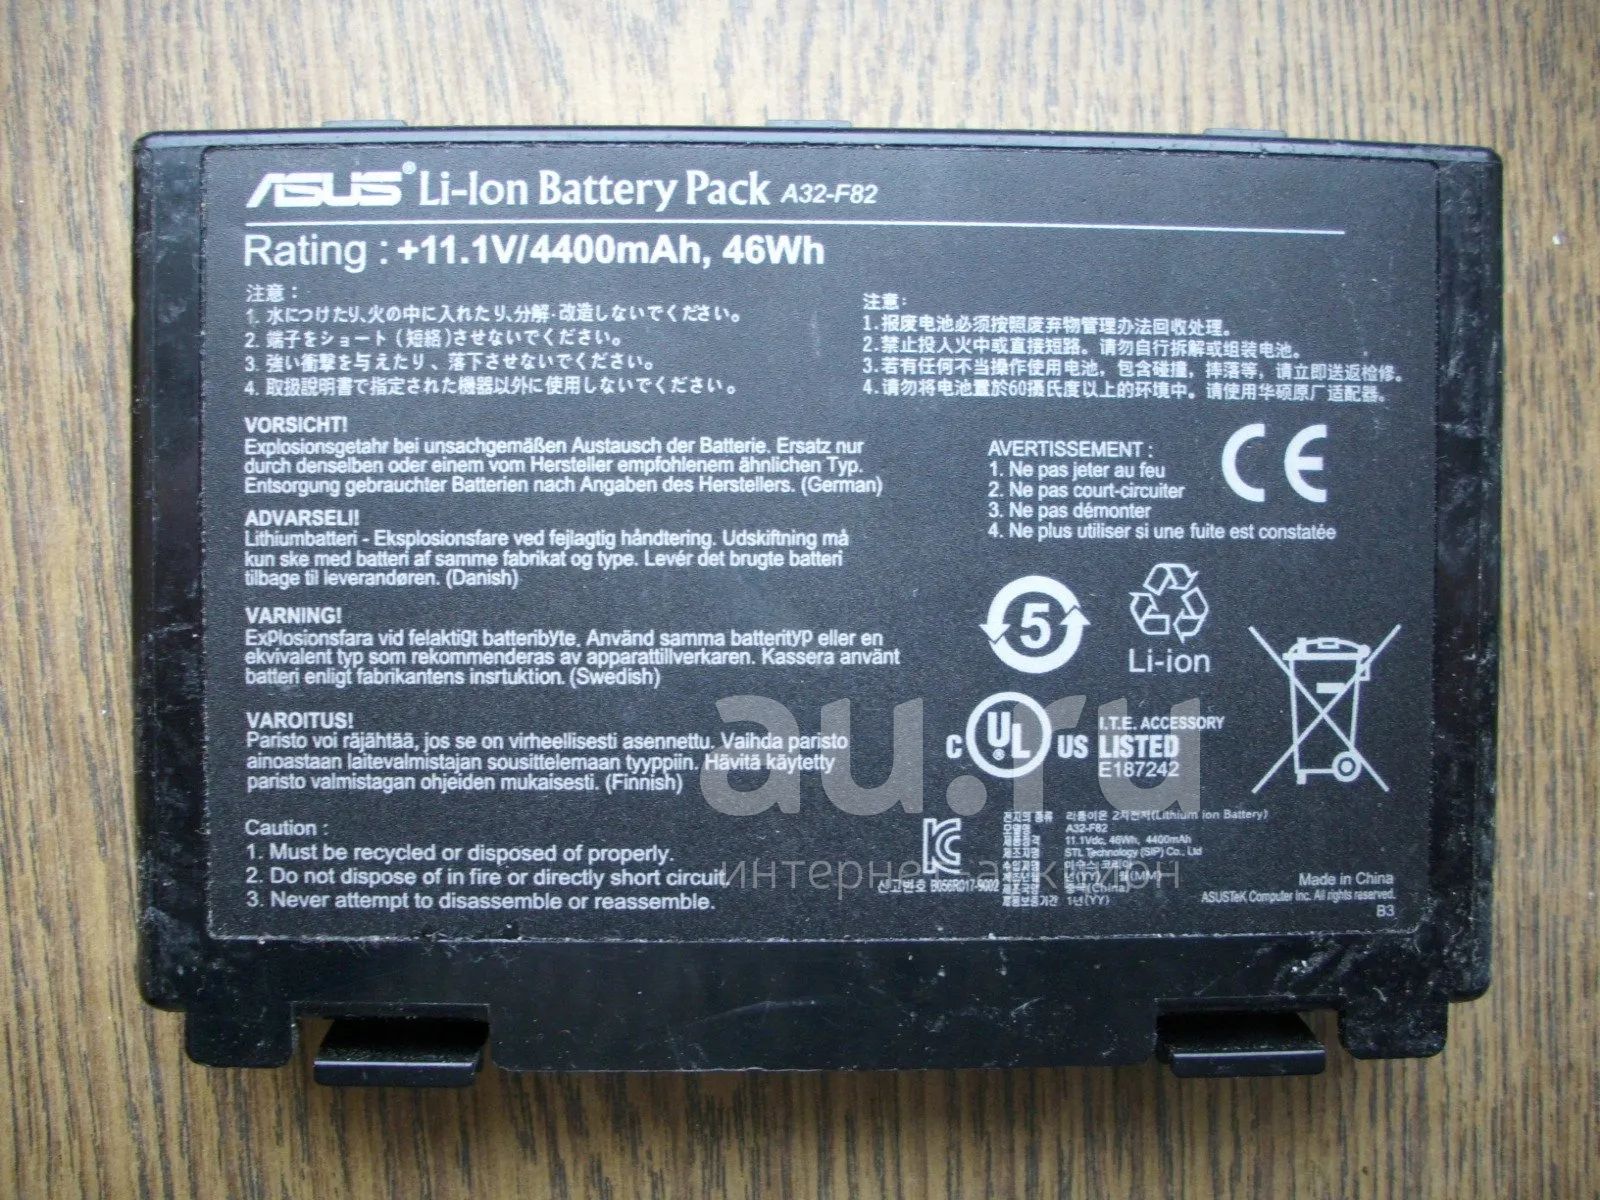 Asus battery pack a32. Аккумулятор ASUS a32-f82. ASUS li-ion Battery Pack a32-f82 Protection Board. A32-f82 полярность. Аккумулятор ASUS a32-f82 схема.